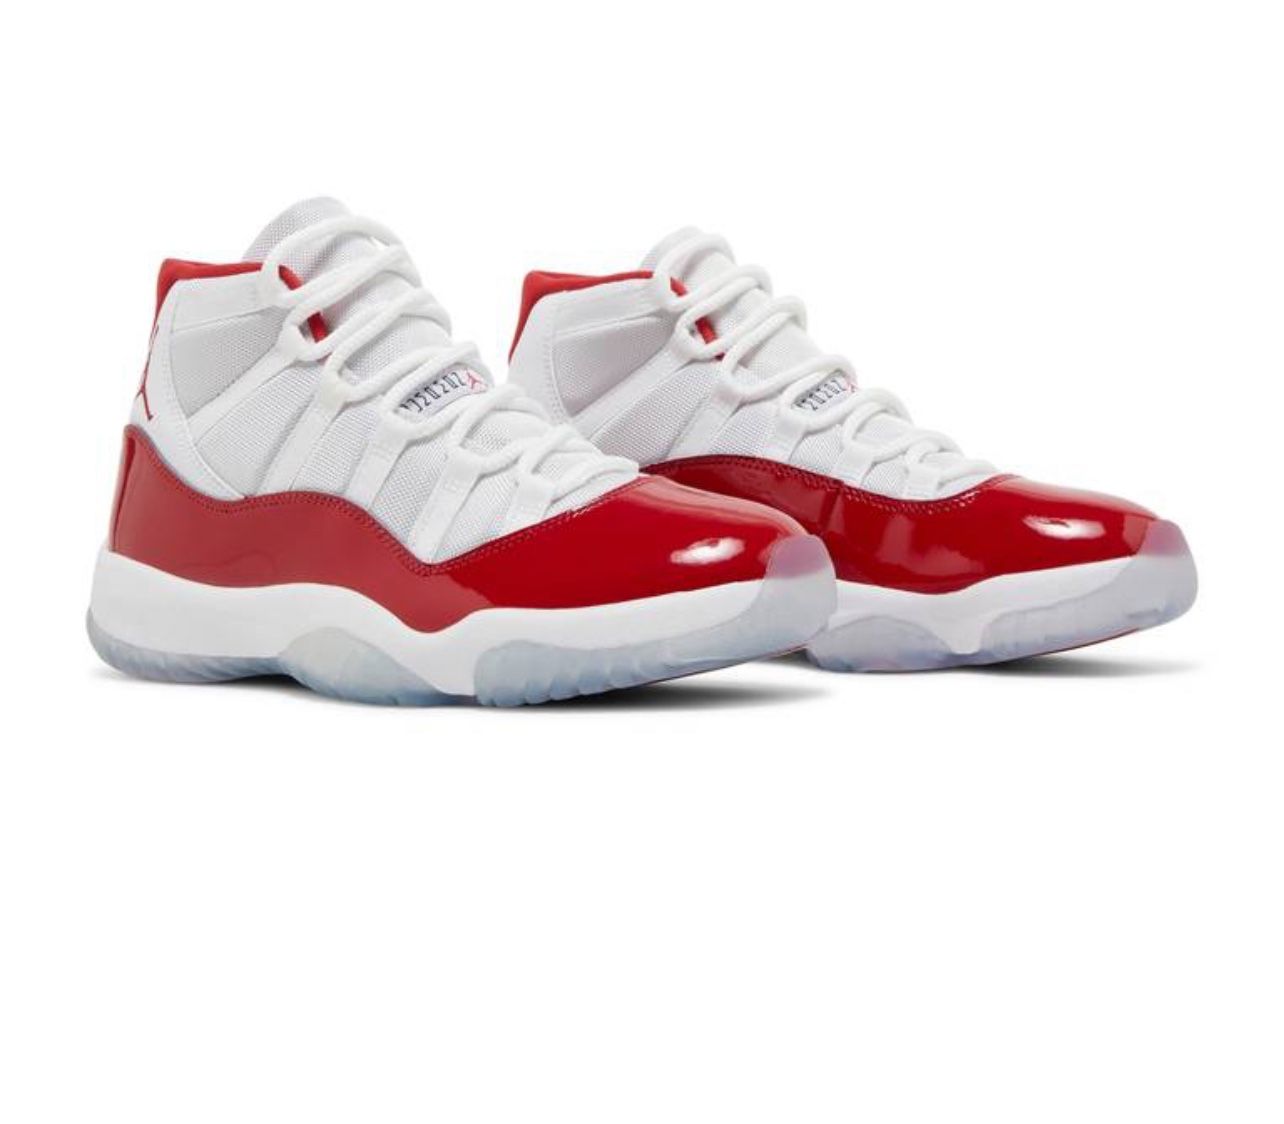 Air Jordan 11 Retro “Cherry”